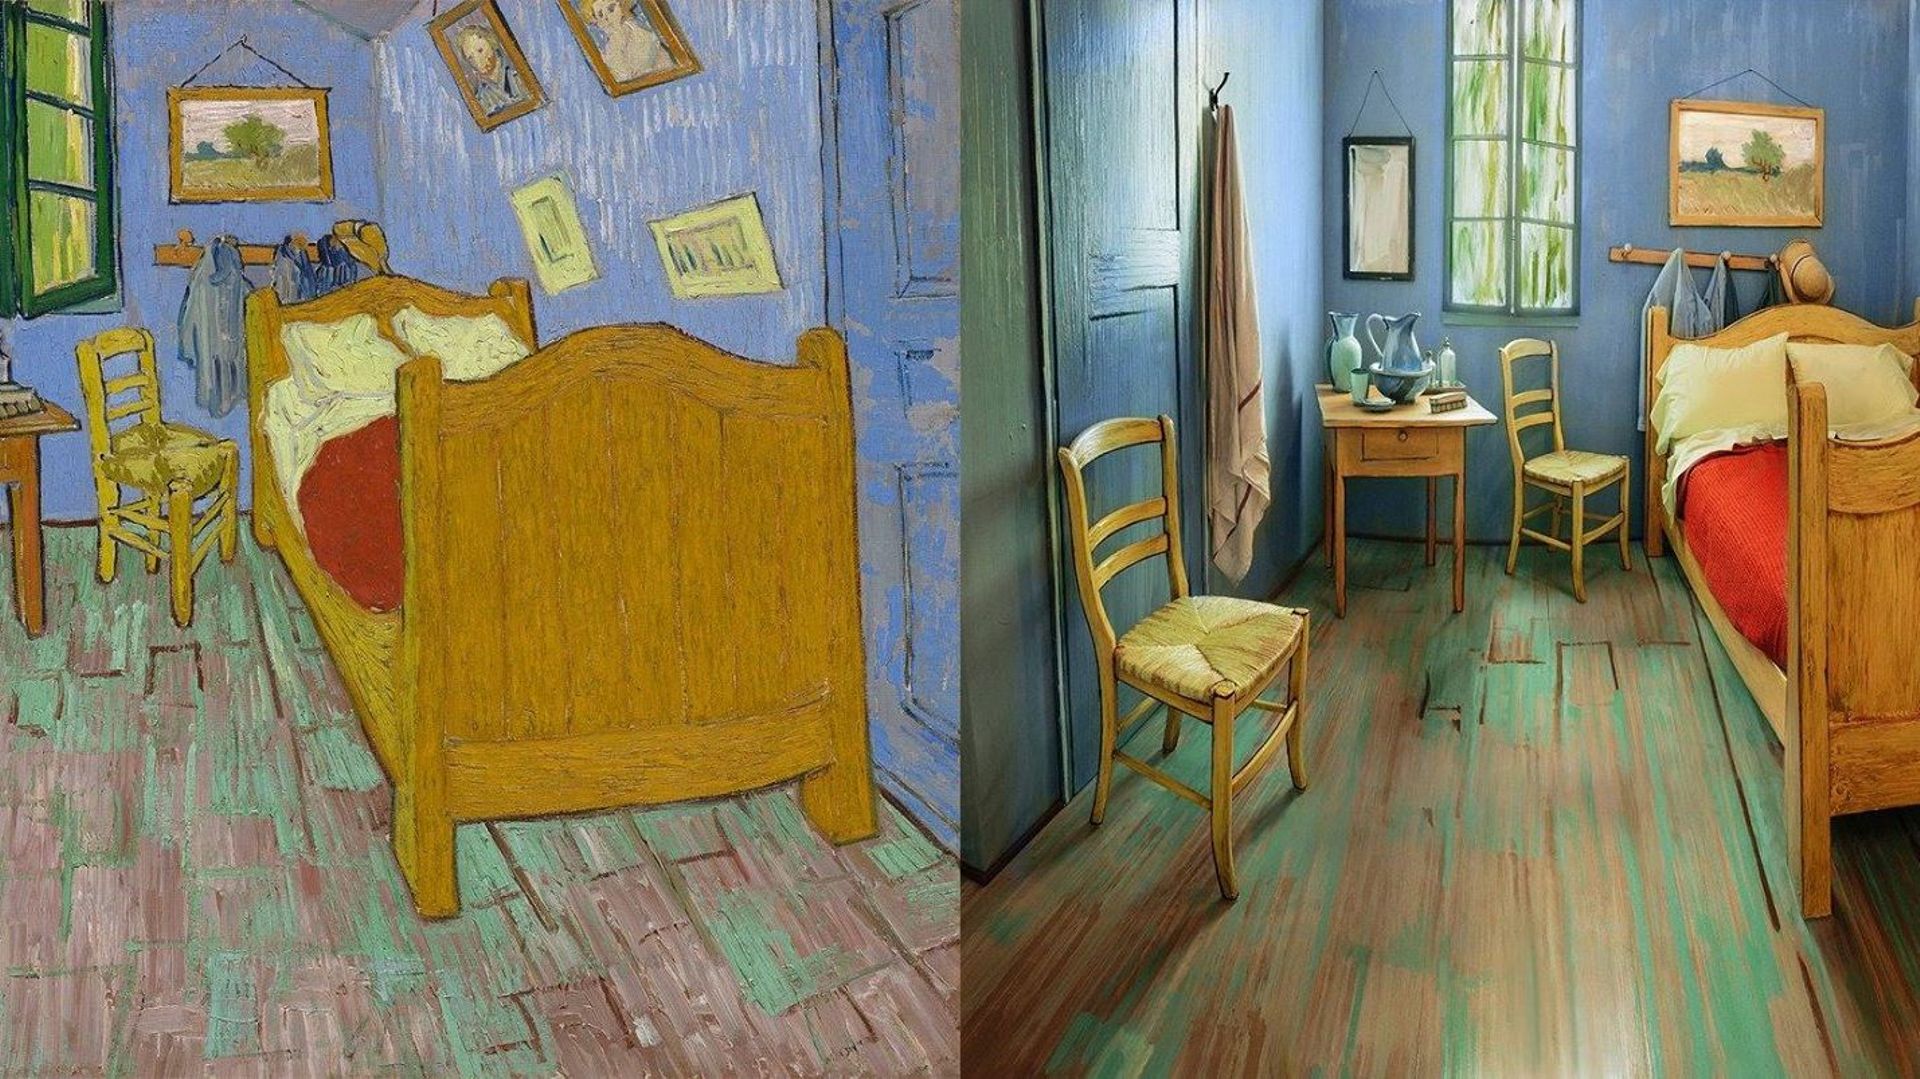 Dormir dans "la chambre à coucher" de Van Gogh c'est possible